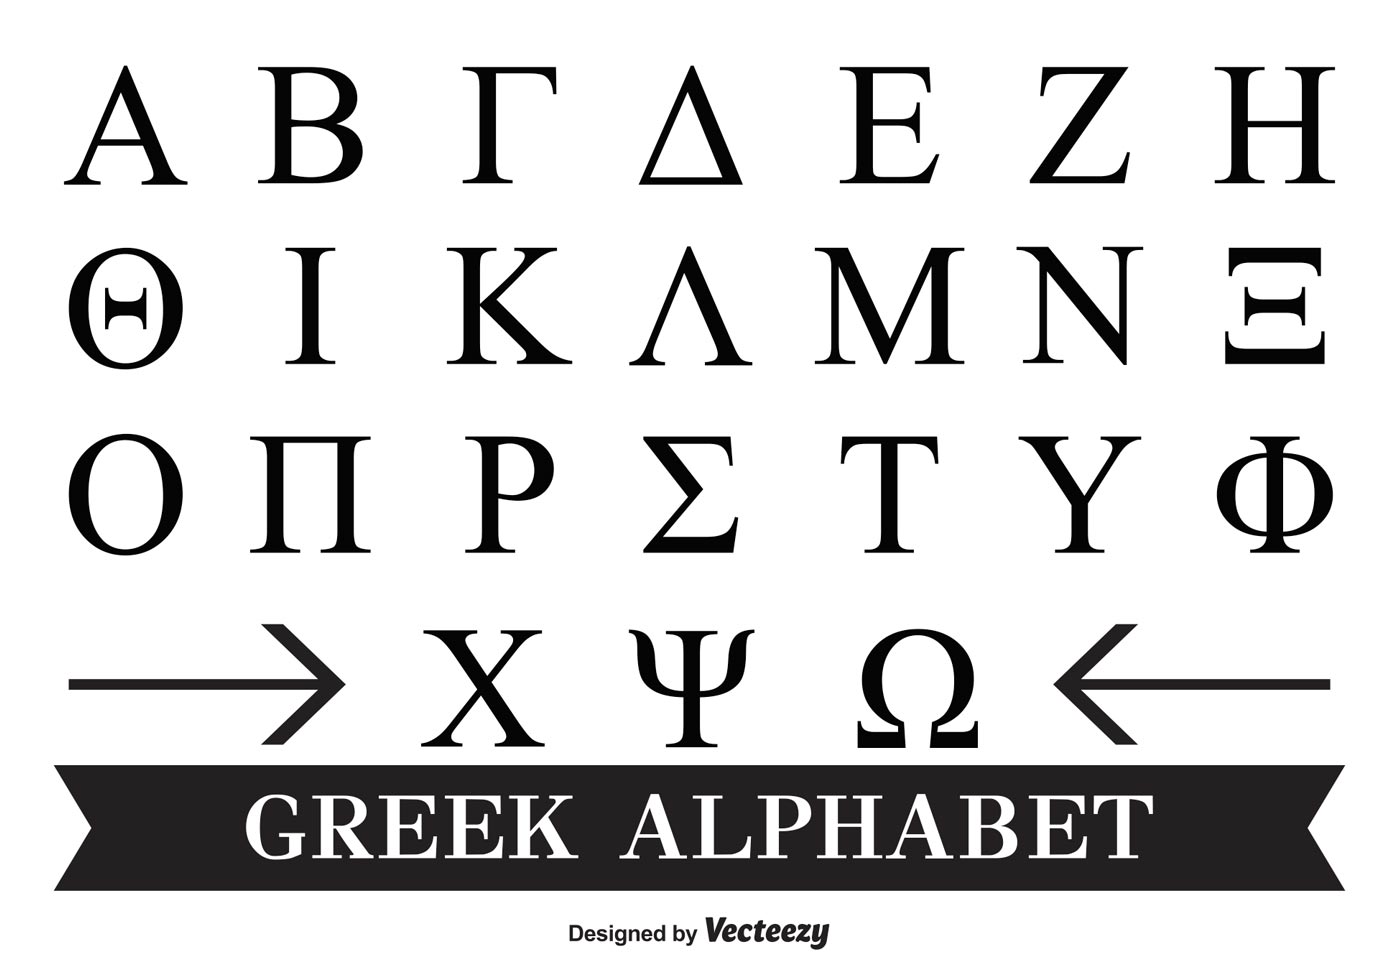 Greek Alphabet Font Free Vector Art - (19 Free Downloads)